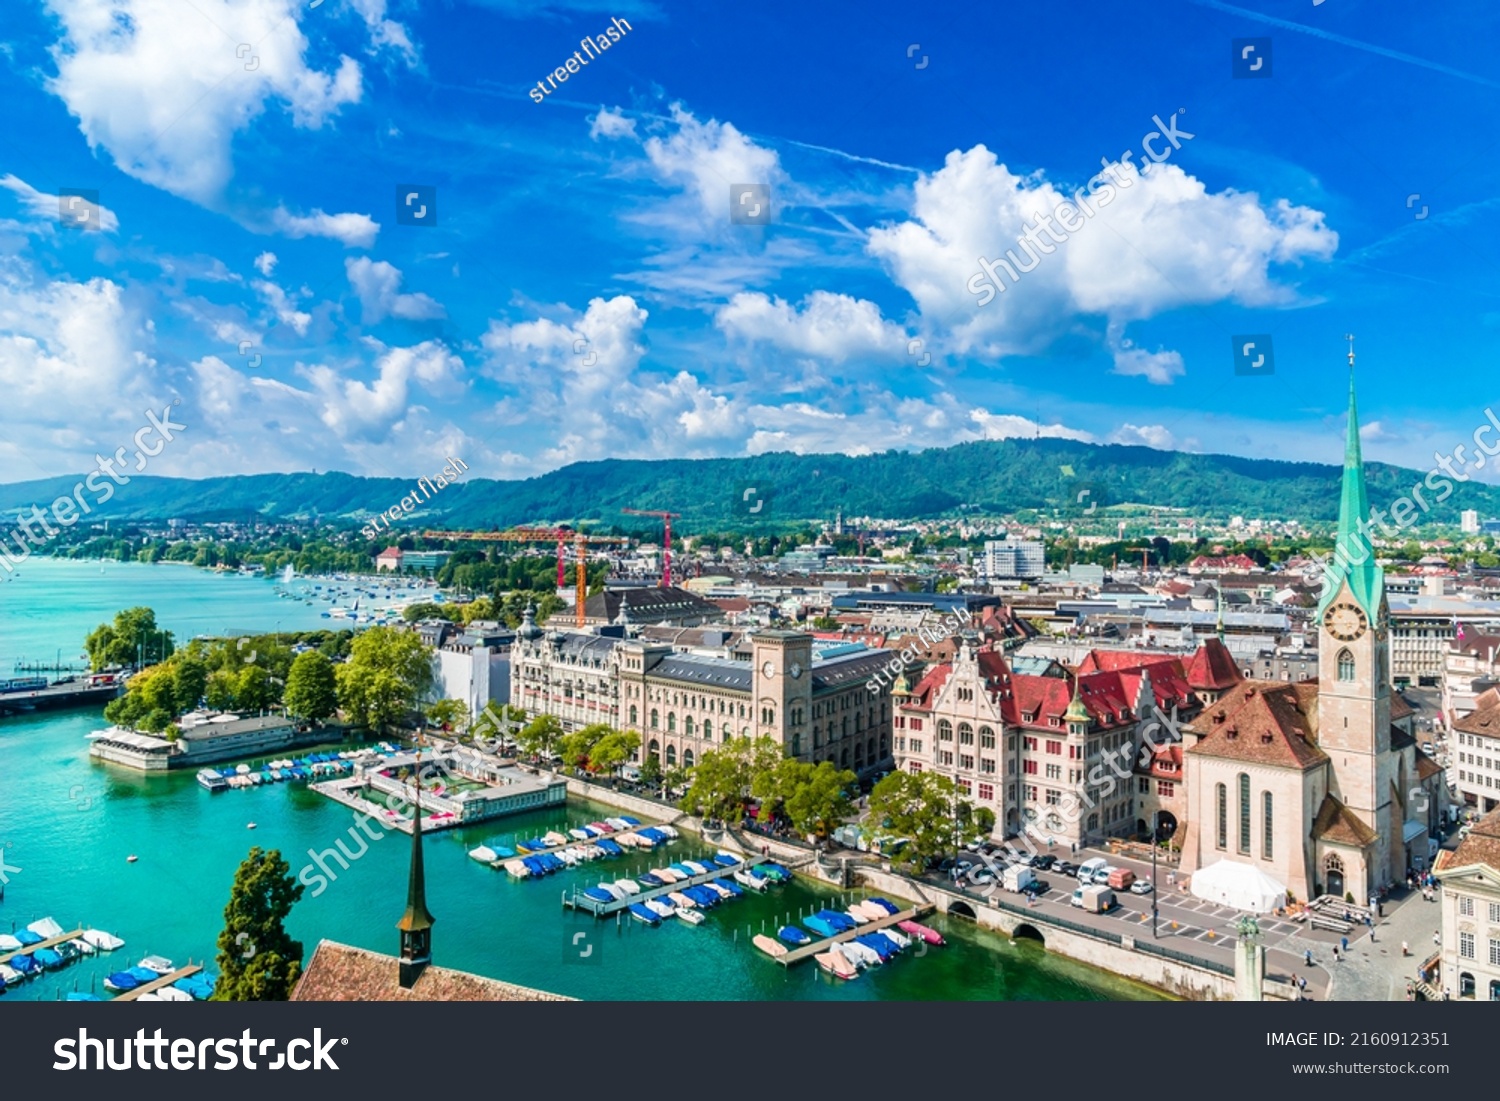 Aerial view of Zurich city center and lake Zurich, Switzerland. High quality photo #2160912351